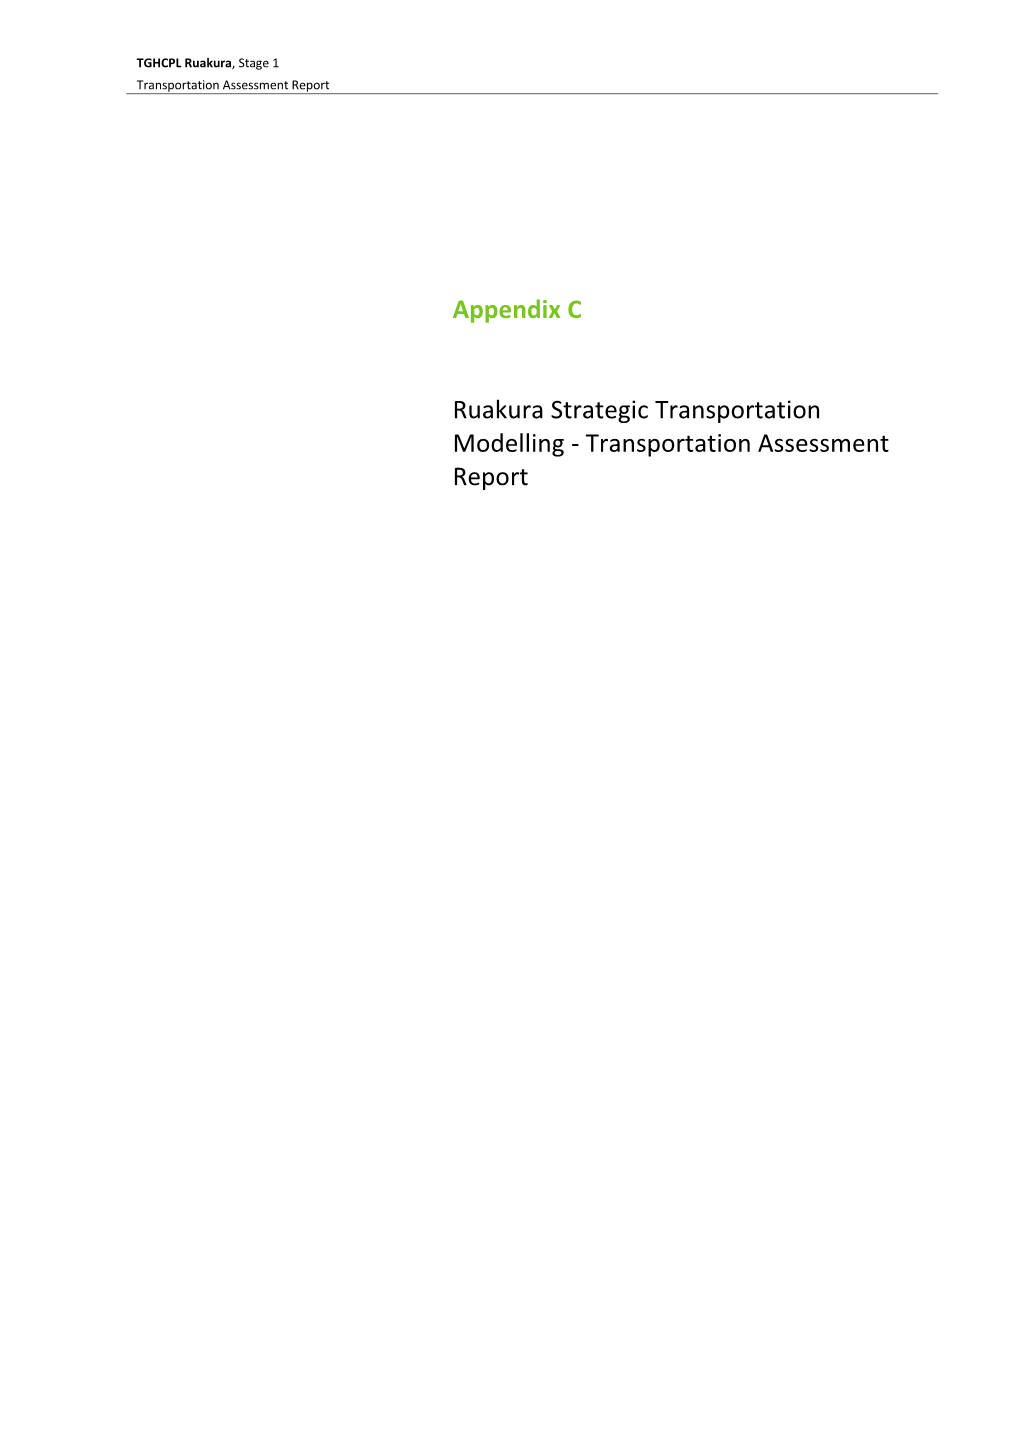 Transportation Assessment Report